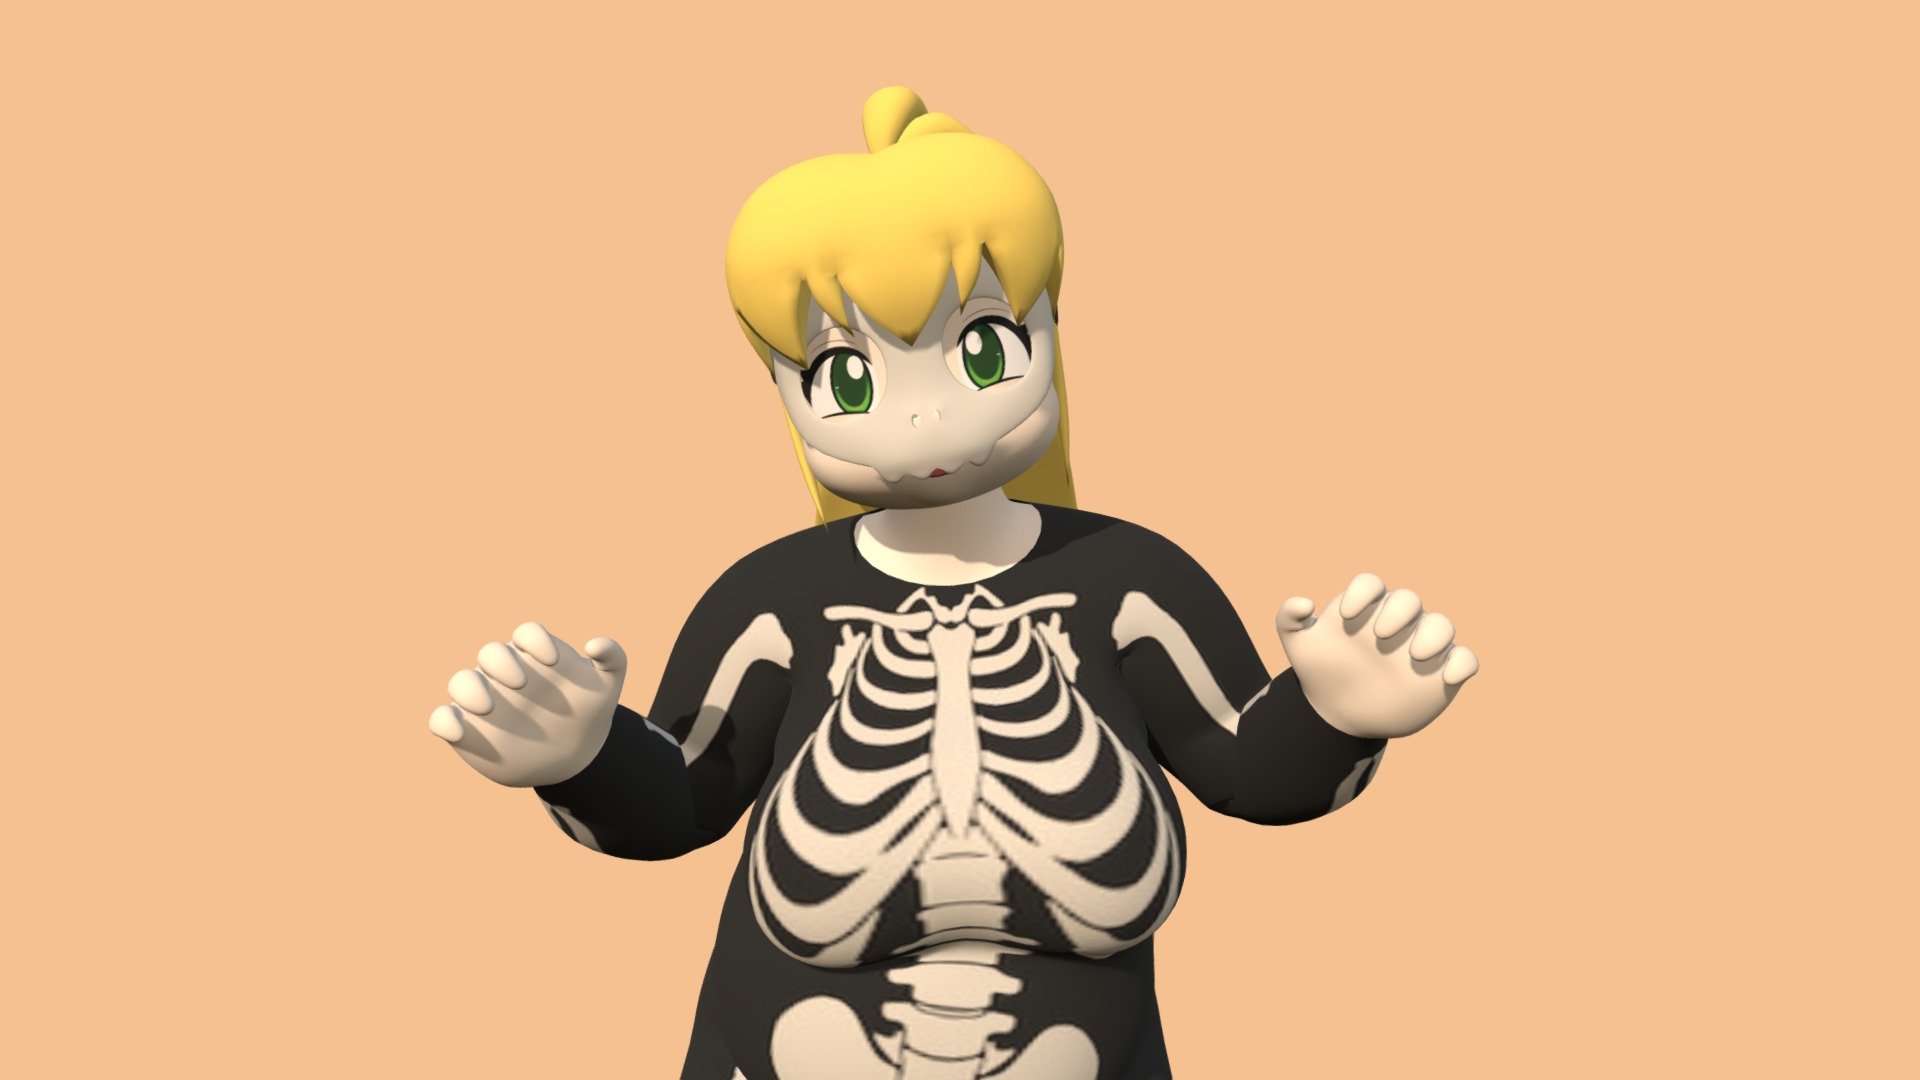 Kyra wearing a skeleton costume 3d model